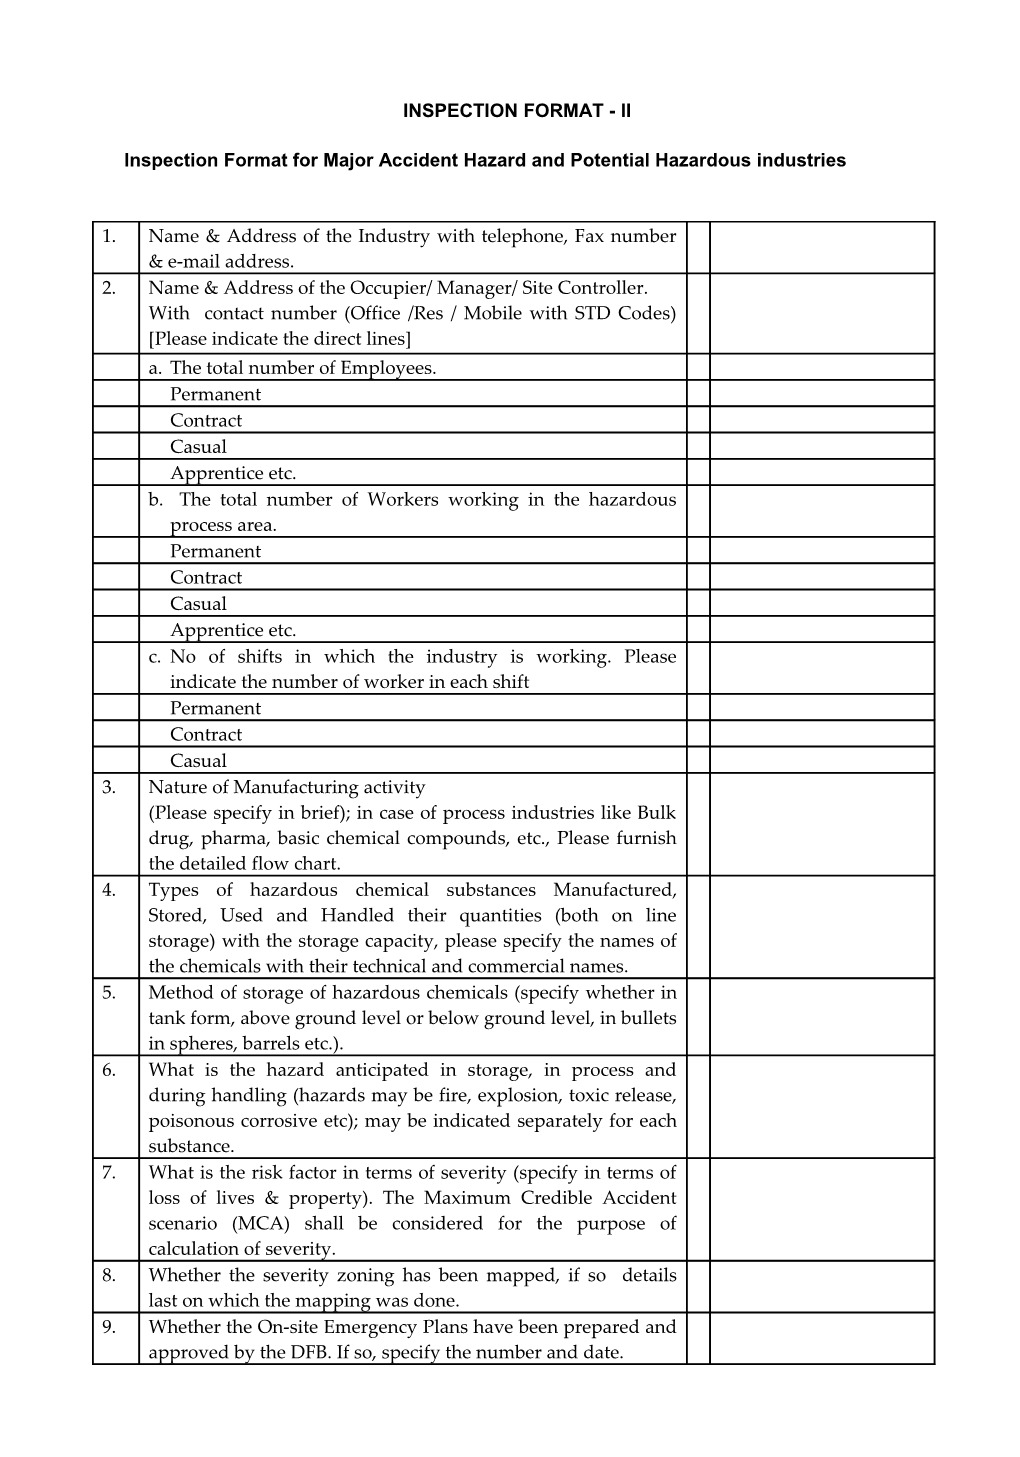 Information Sheet on Major Accident Hazard/2Cb Units in the State of Karnataka